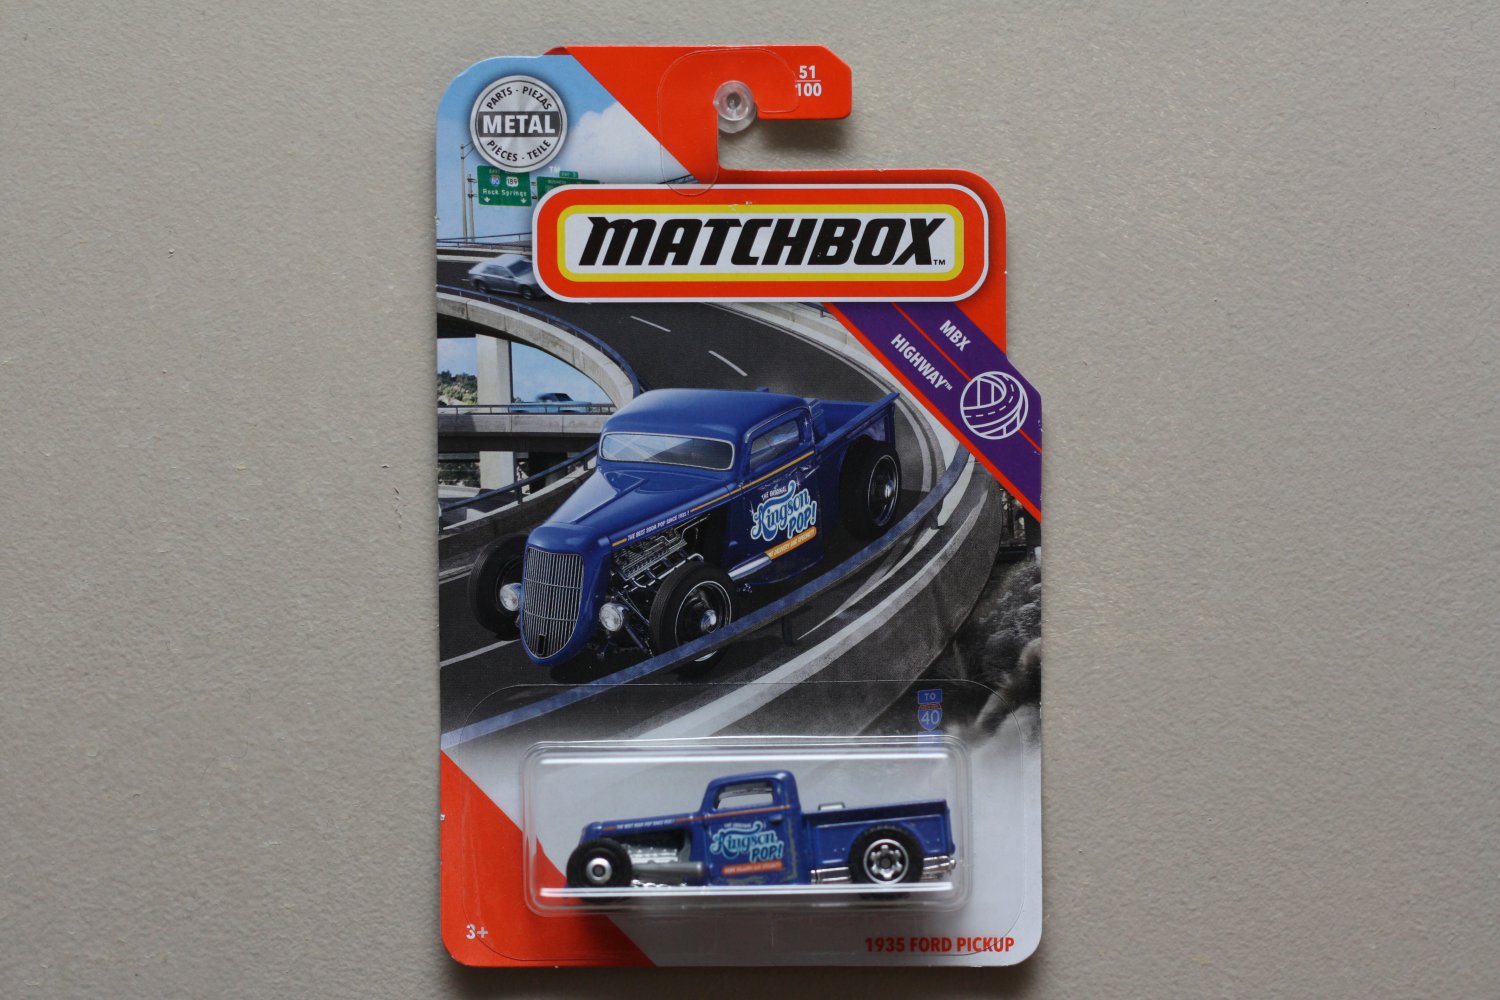 Matchbox 2020 MBX Highway '35 Ford Pickup (blue)